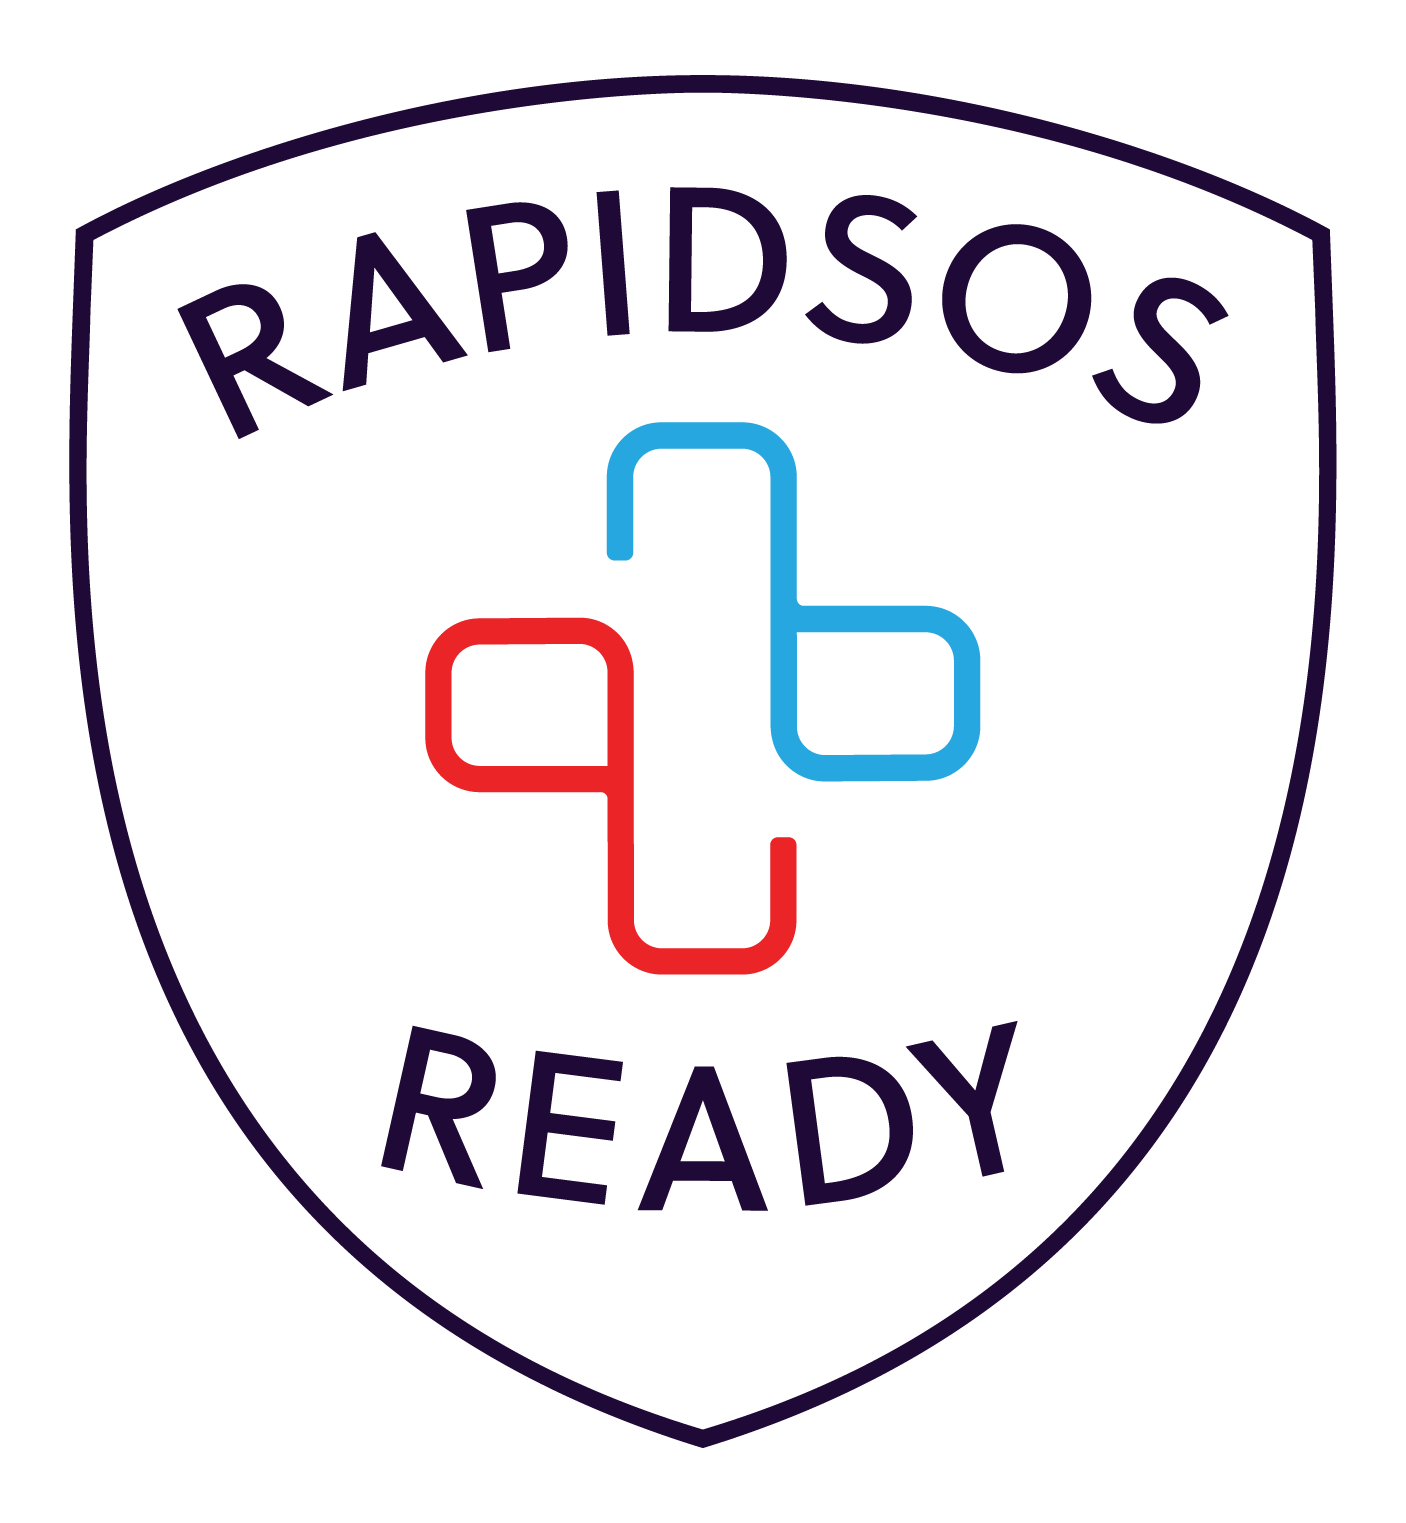 badge-rapidsos-ready-6e01971db4ecf17efc23c31dc943190f084f5700cba15b9a4a04f18147d9b63b-1343243434.png